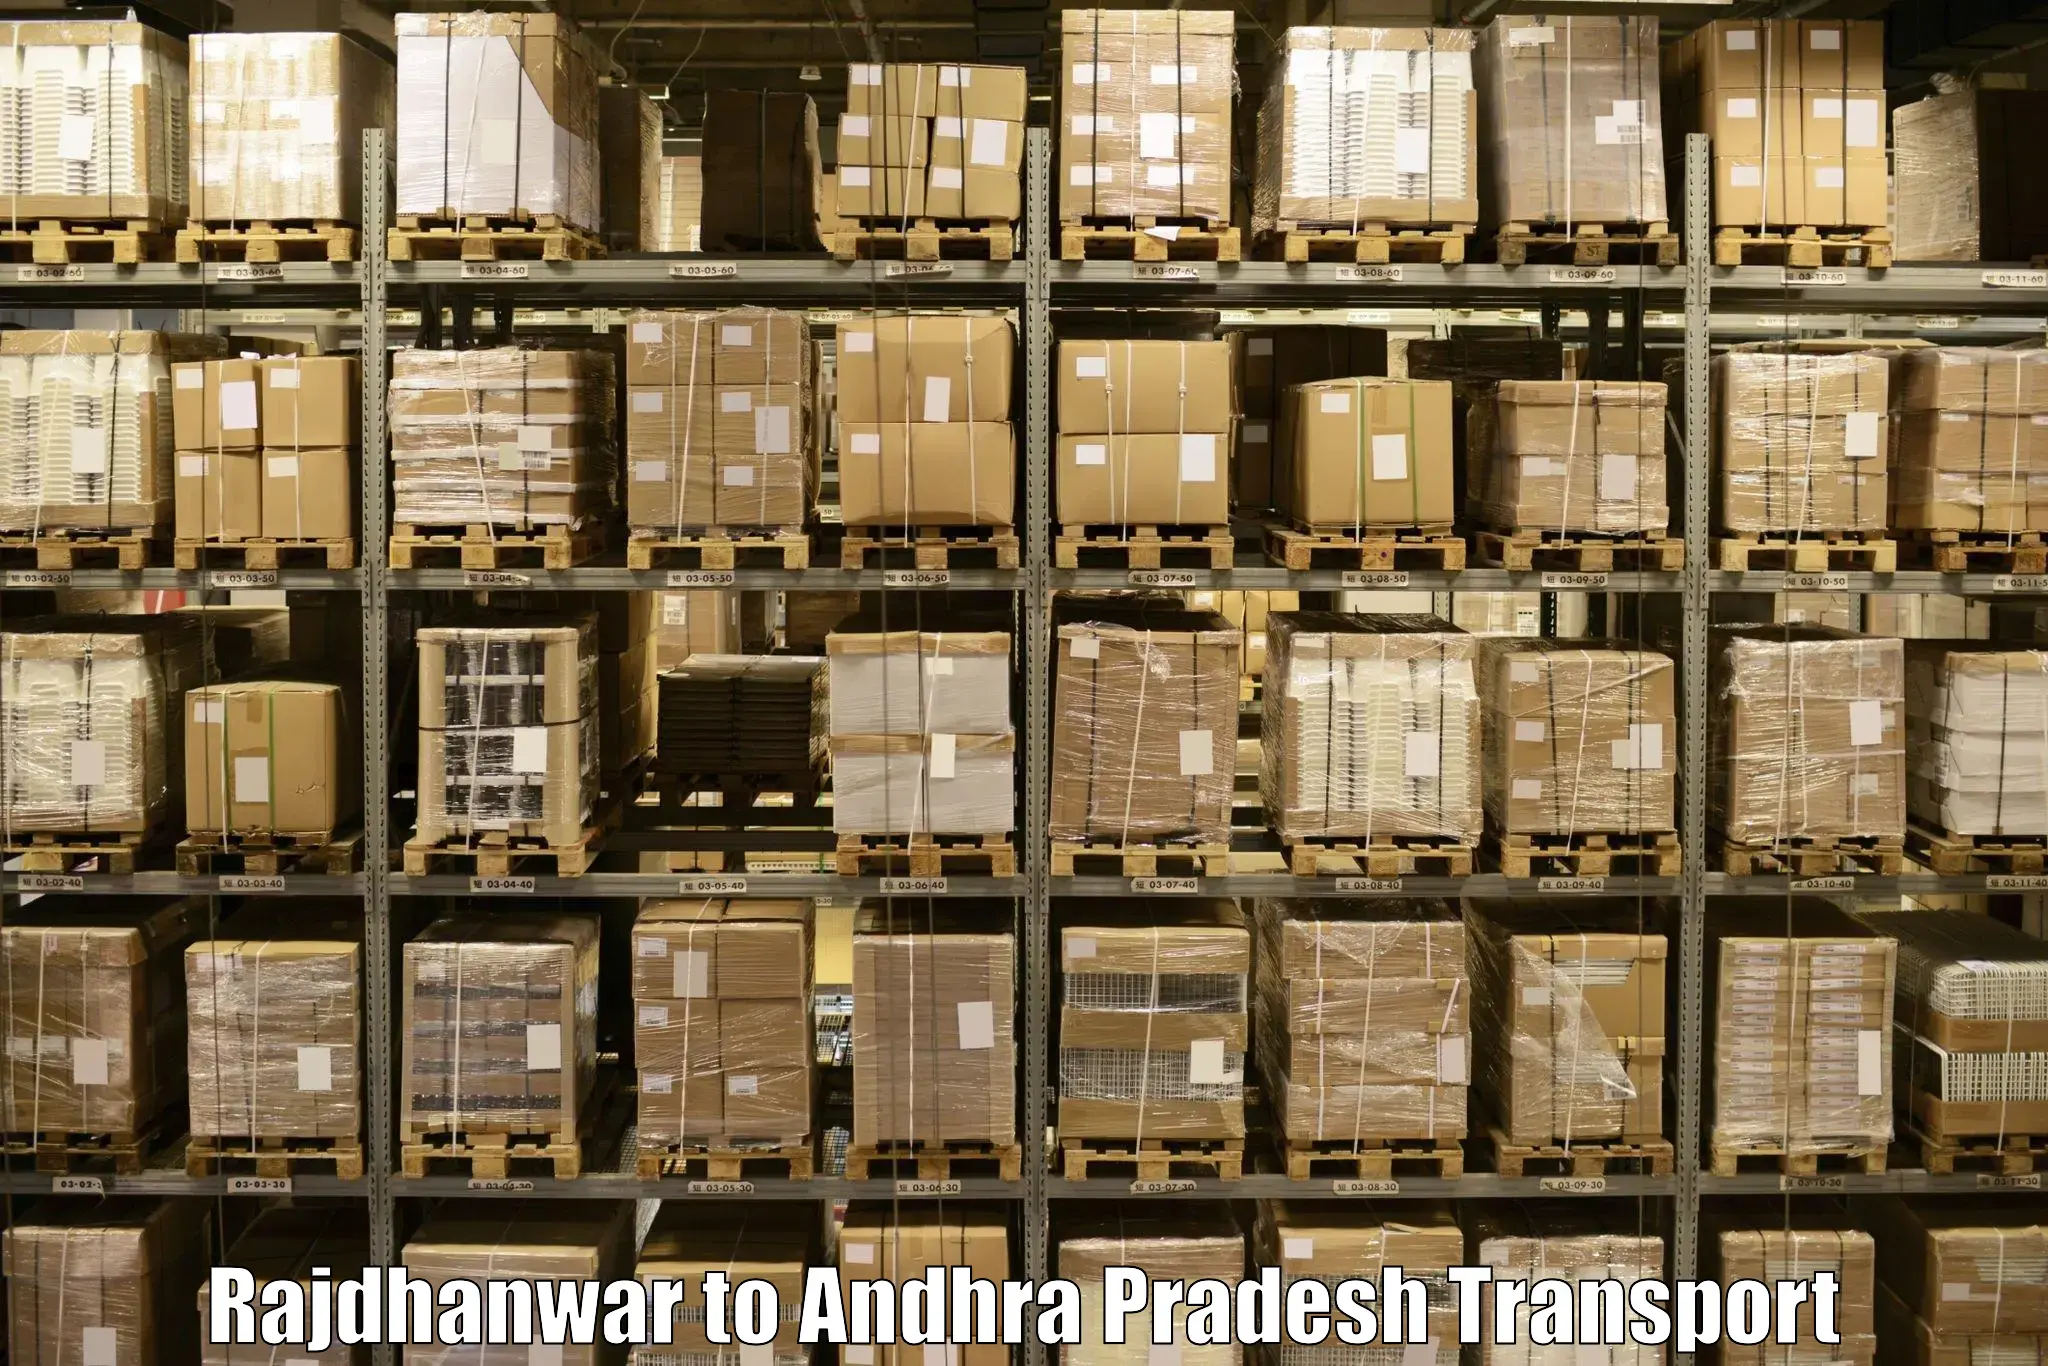 Sending bike to another city Rajdhanwar to Gudivada